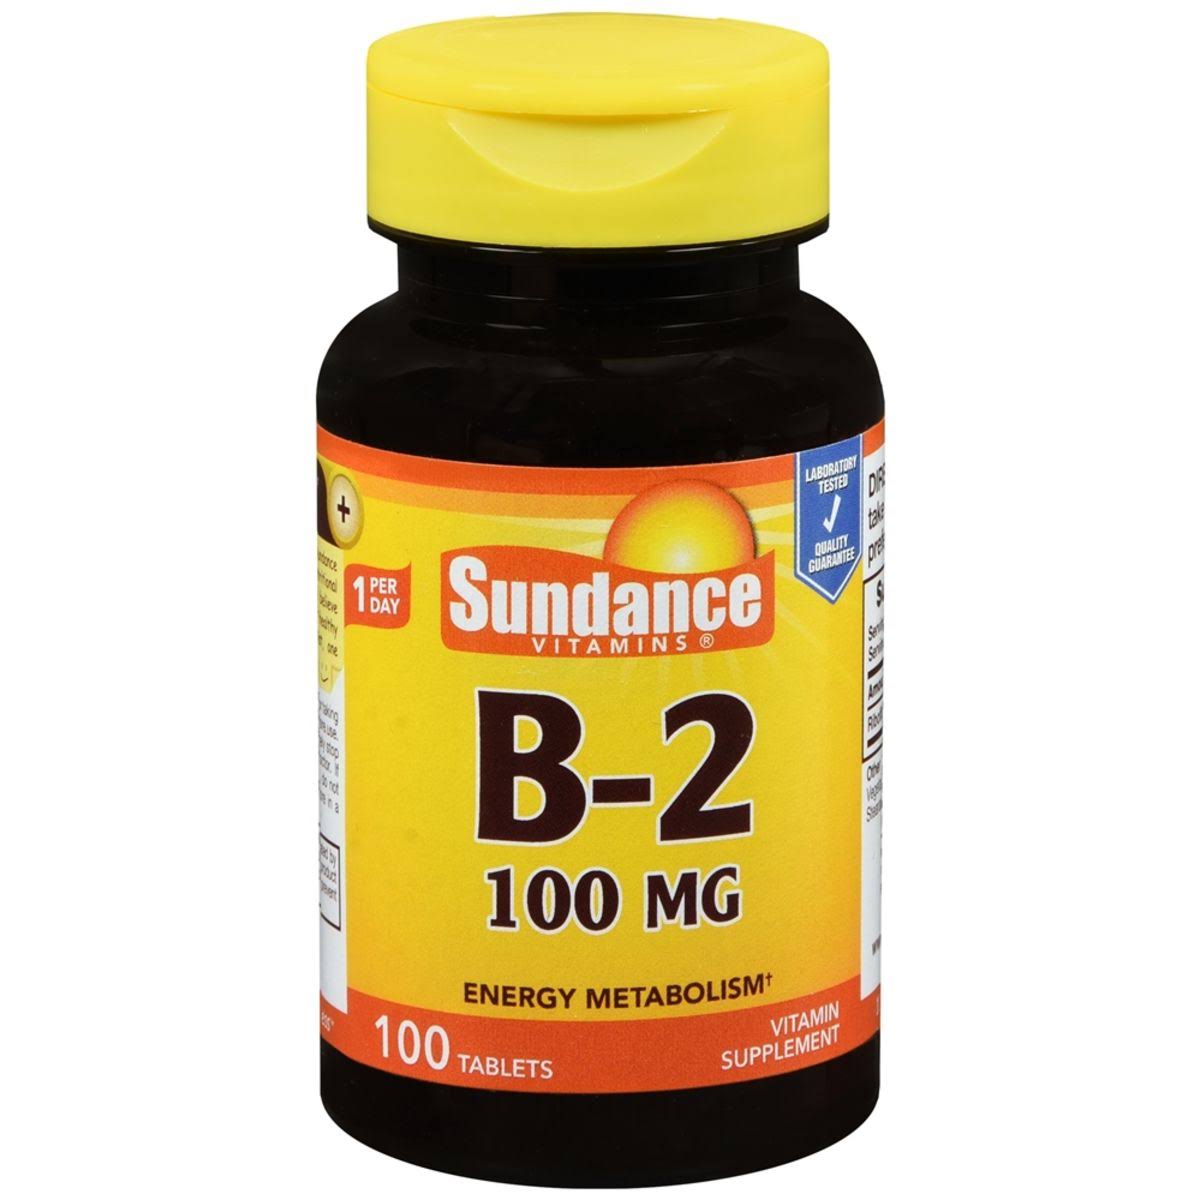 Sundance B-2 Energy Metabolism Vitamins - 100mg, 100ct